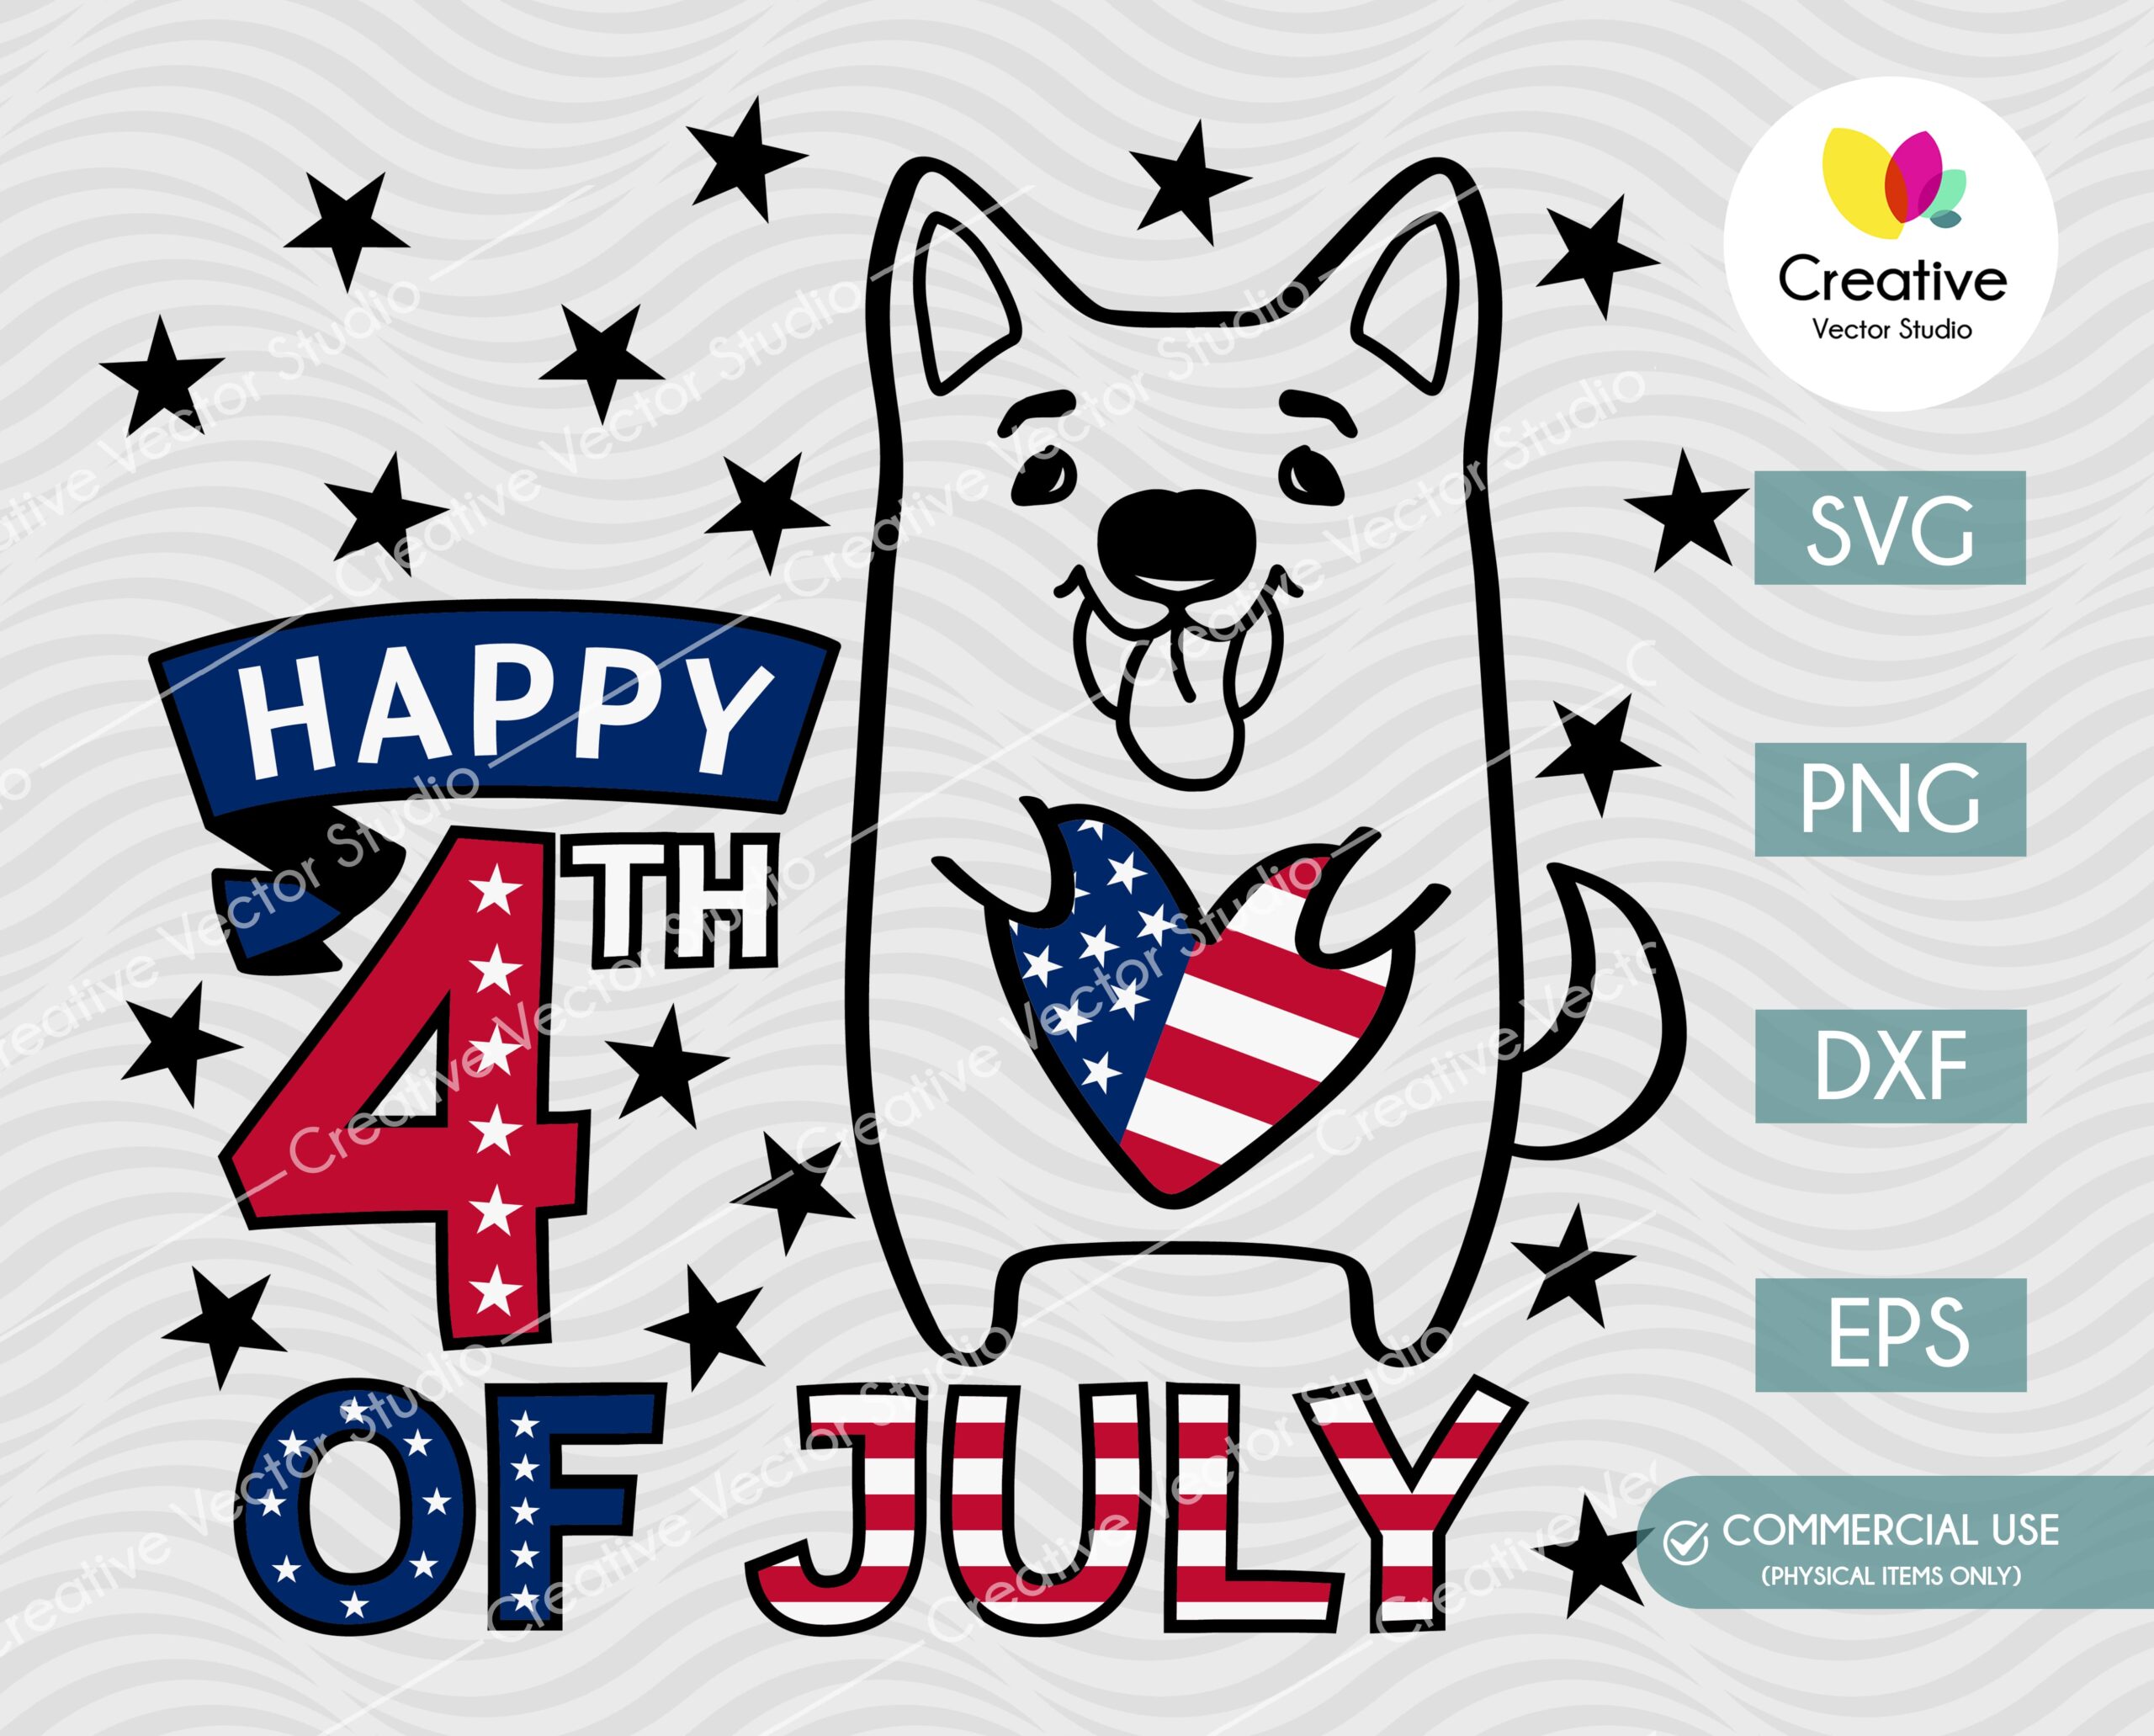 Patriotic Dog SVG, PNG, DXF, EPS - Creative Vector Studio